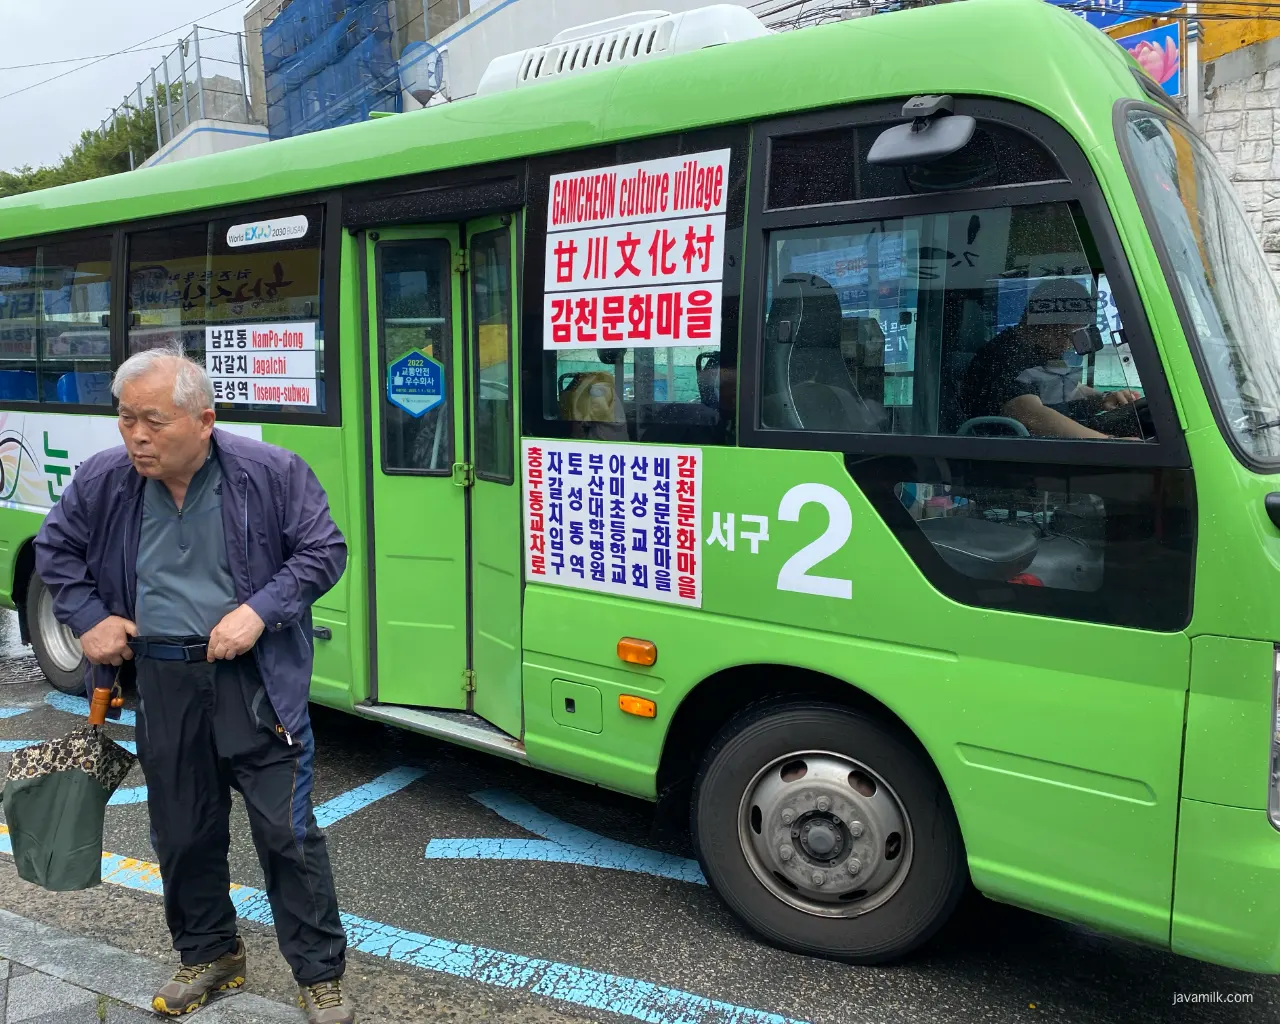 Bus menuju Gamcheon village